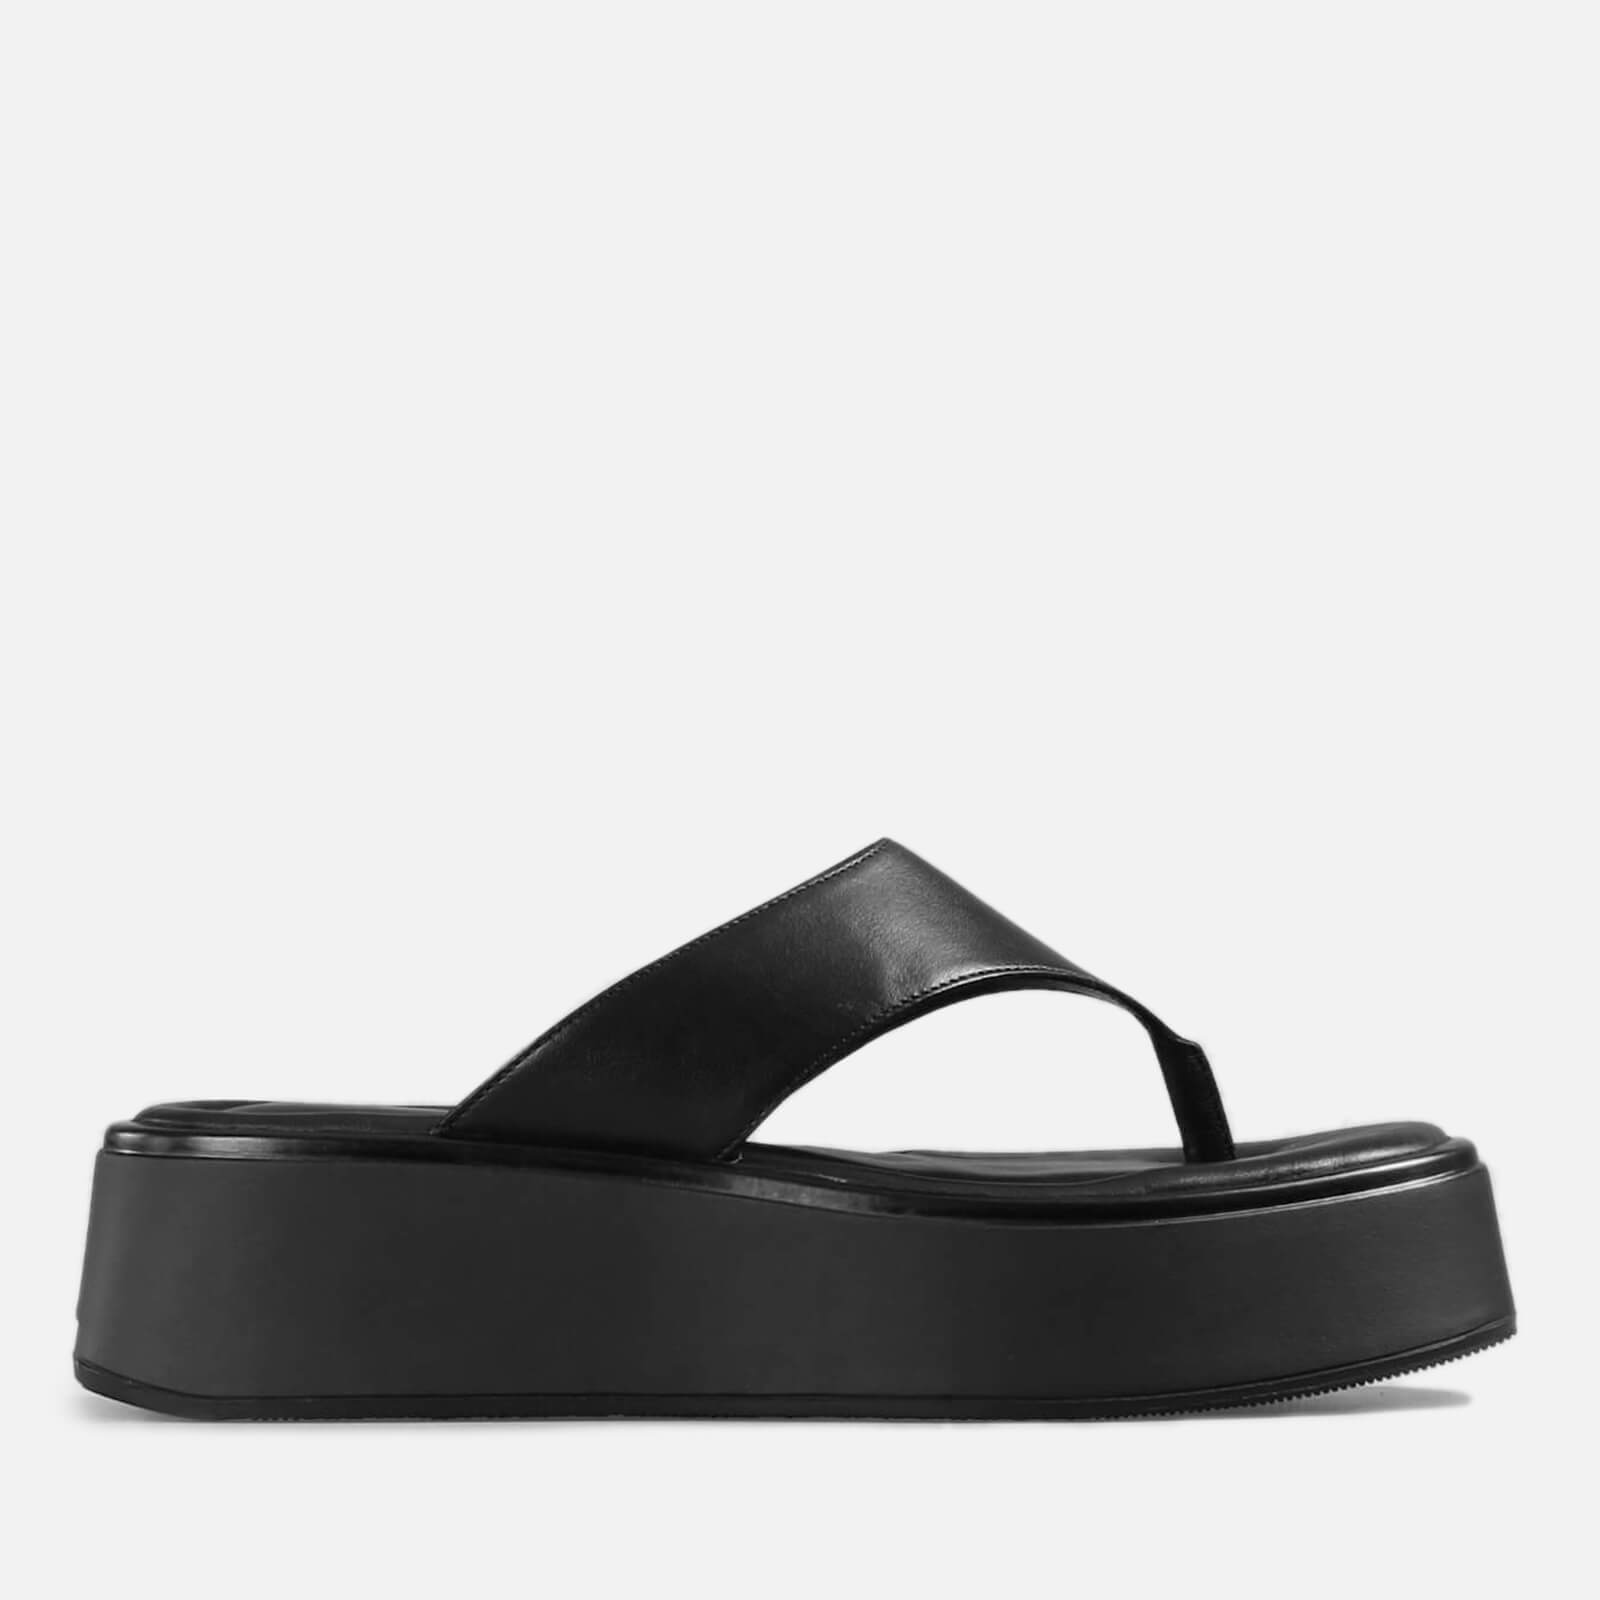 Vagabond Women’s Courtney Leather Toe Post Sandals - Black/Black